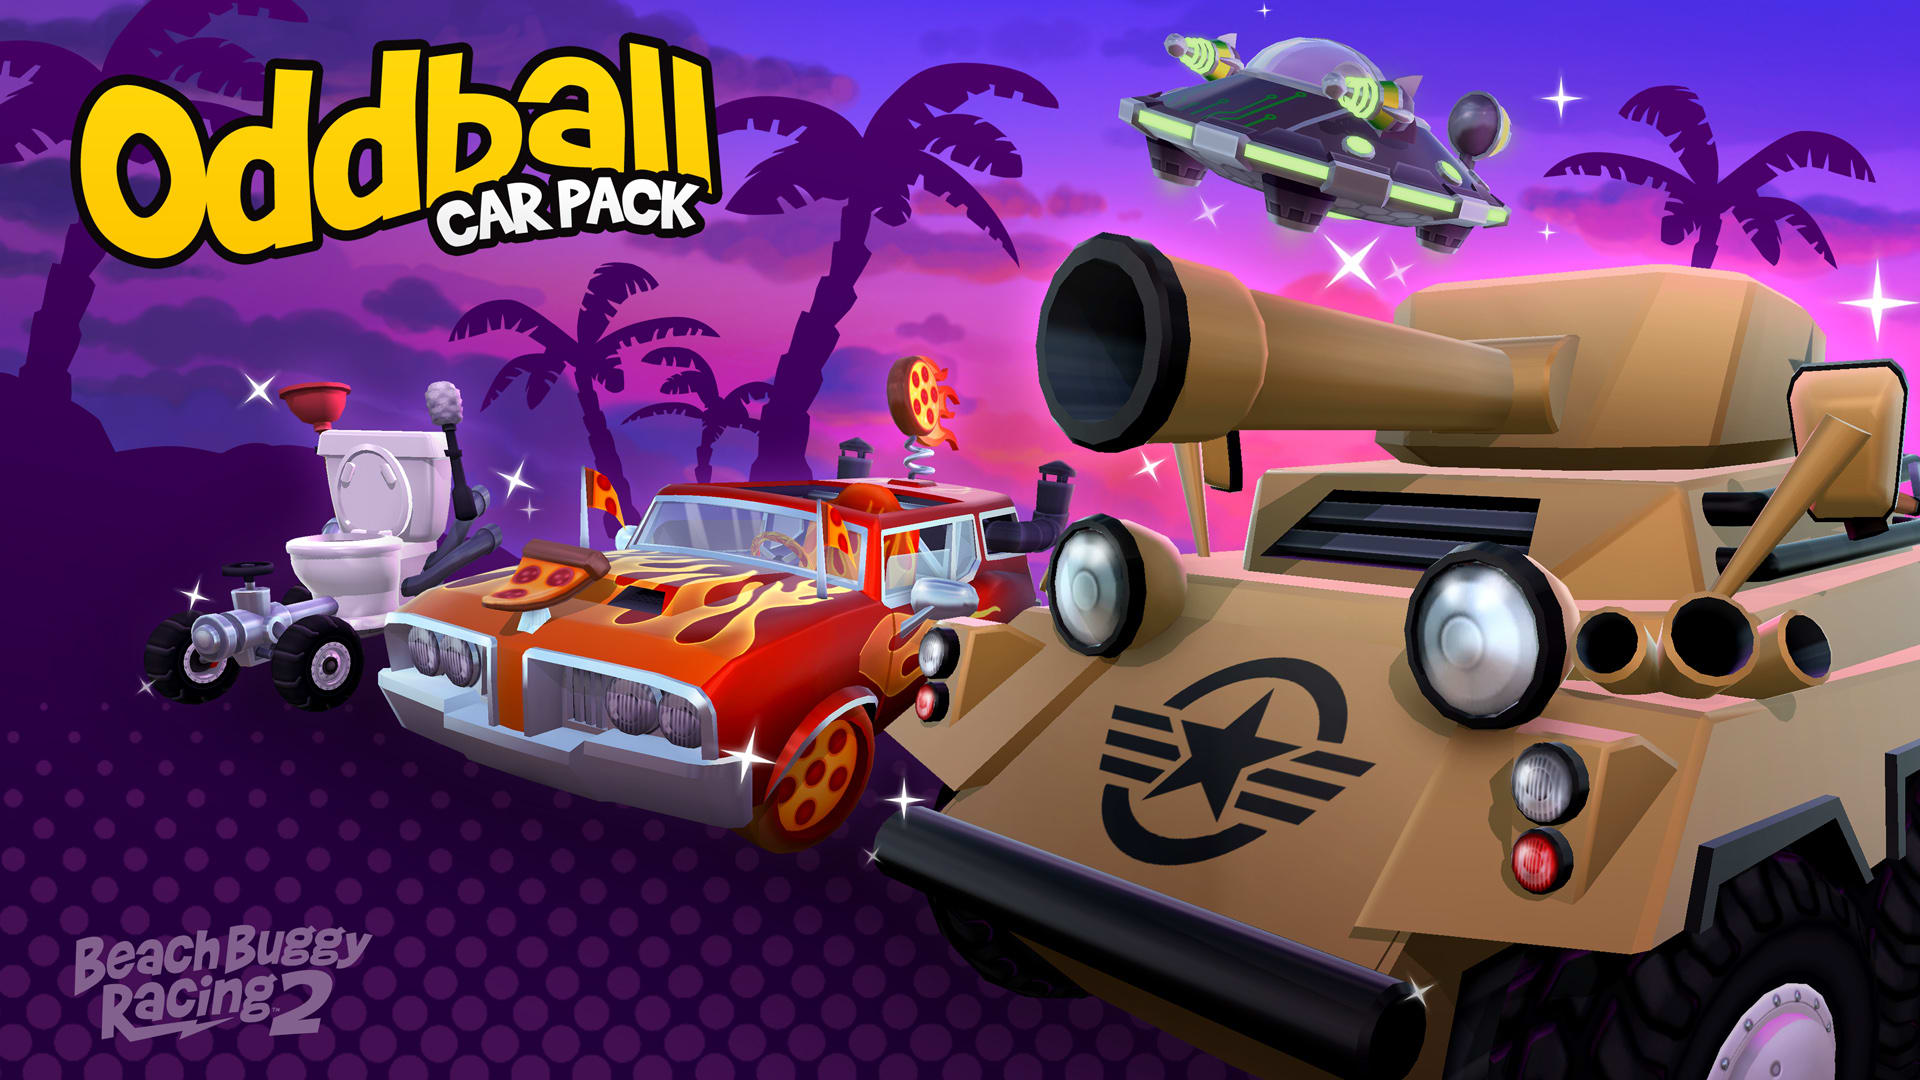 Oddball Car Pack